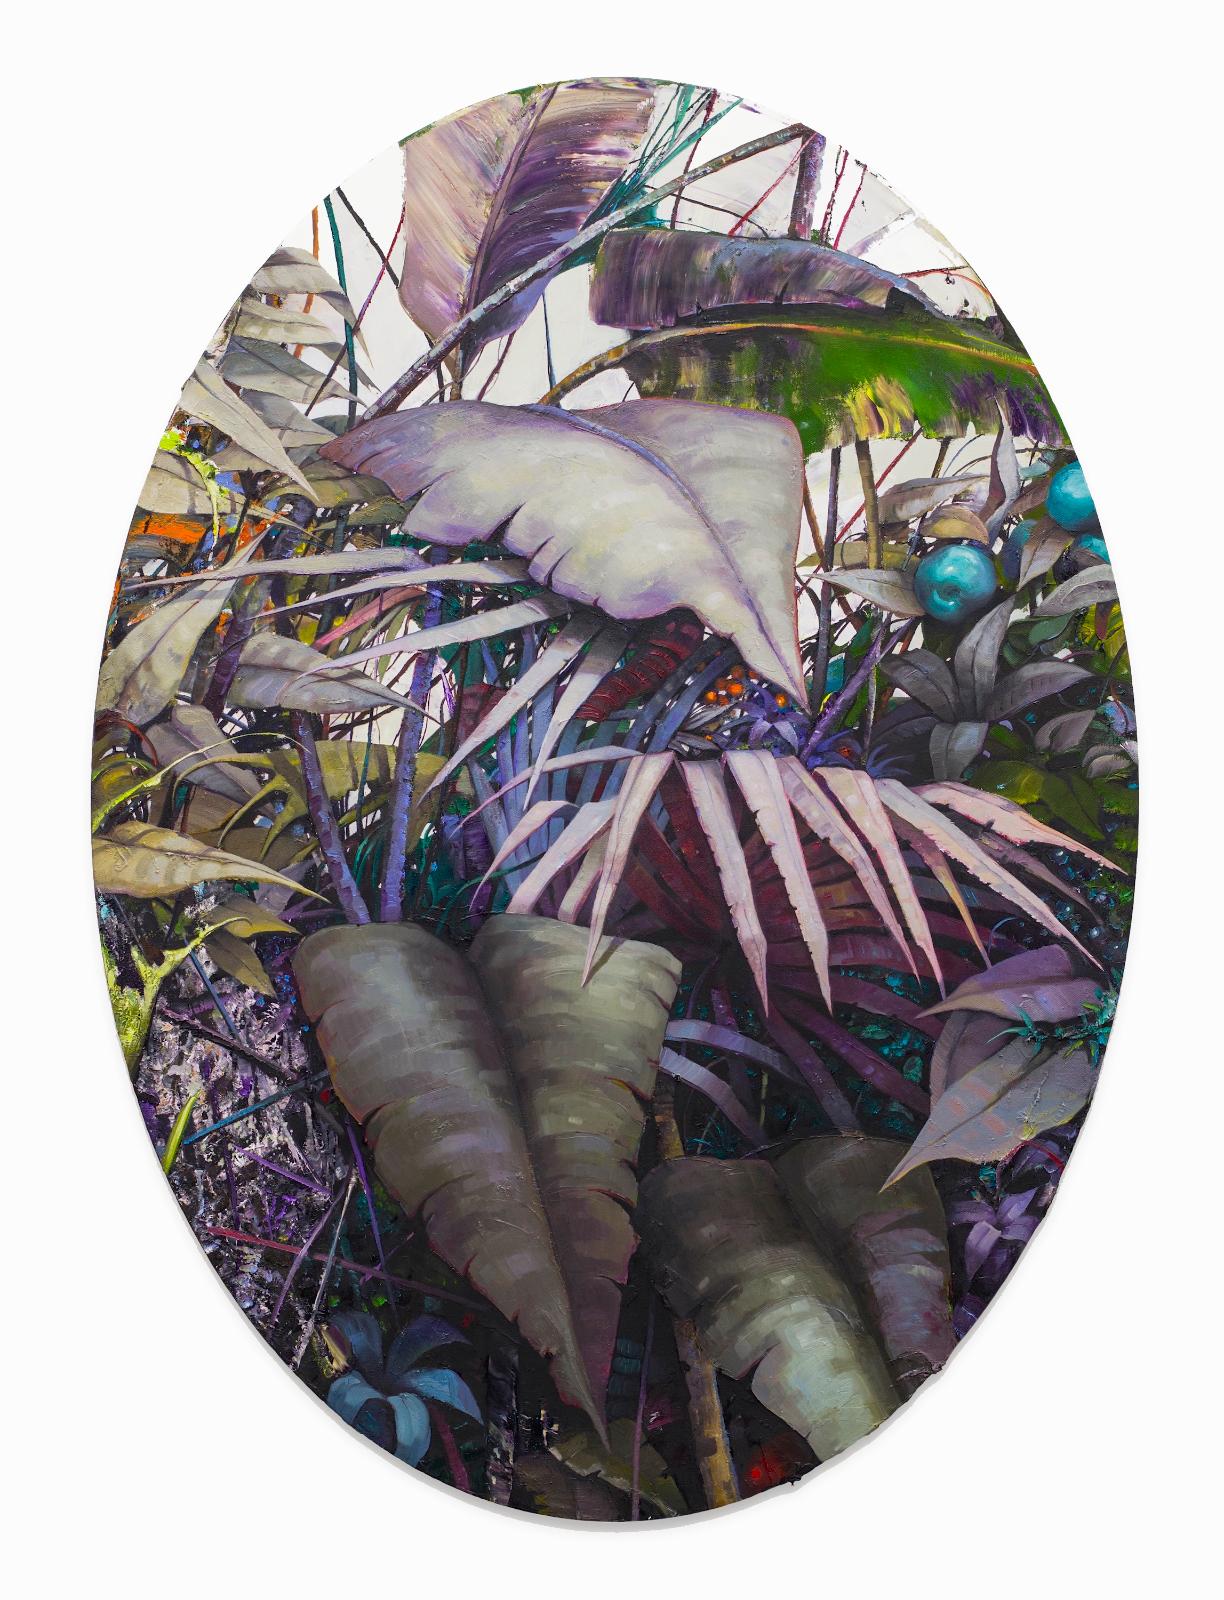 Jens Hausmann, The Garden / Oval, 2016, Öl auf Leinwand, 138 cm x 100 cm